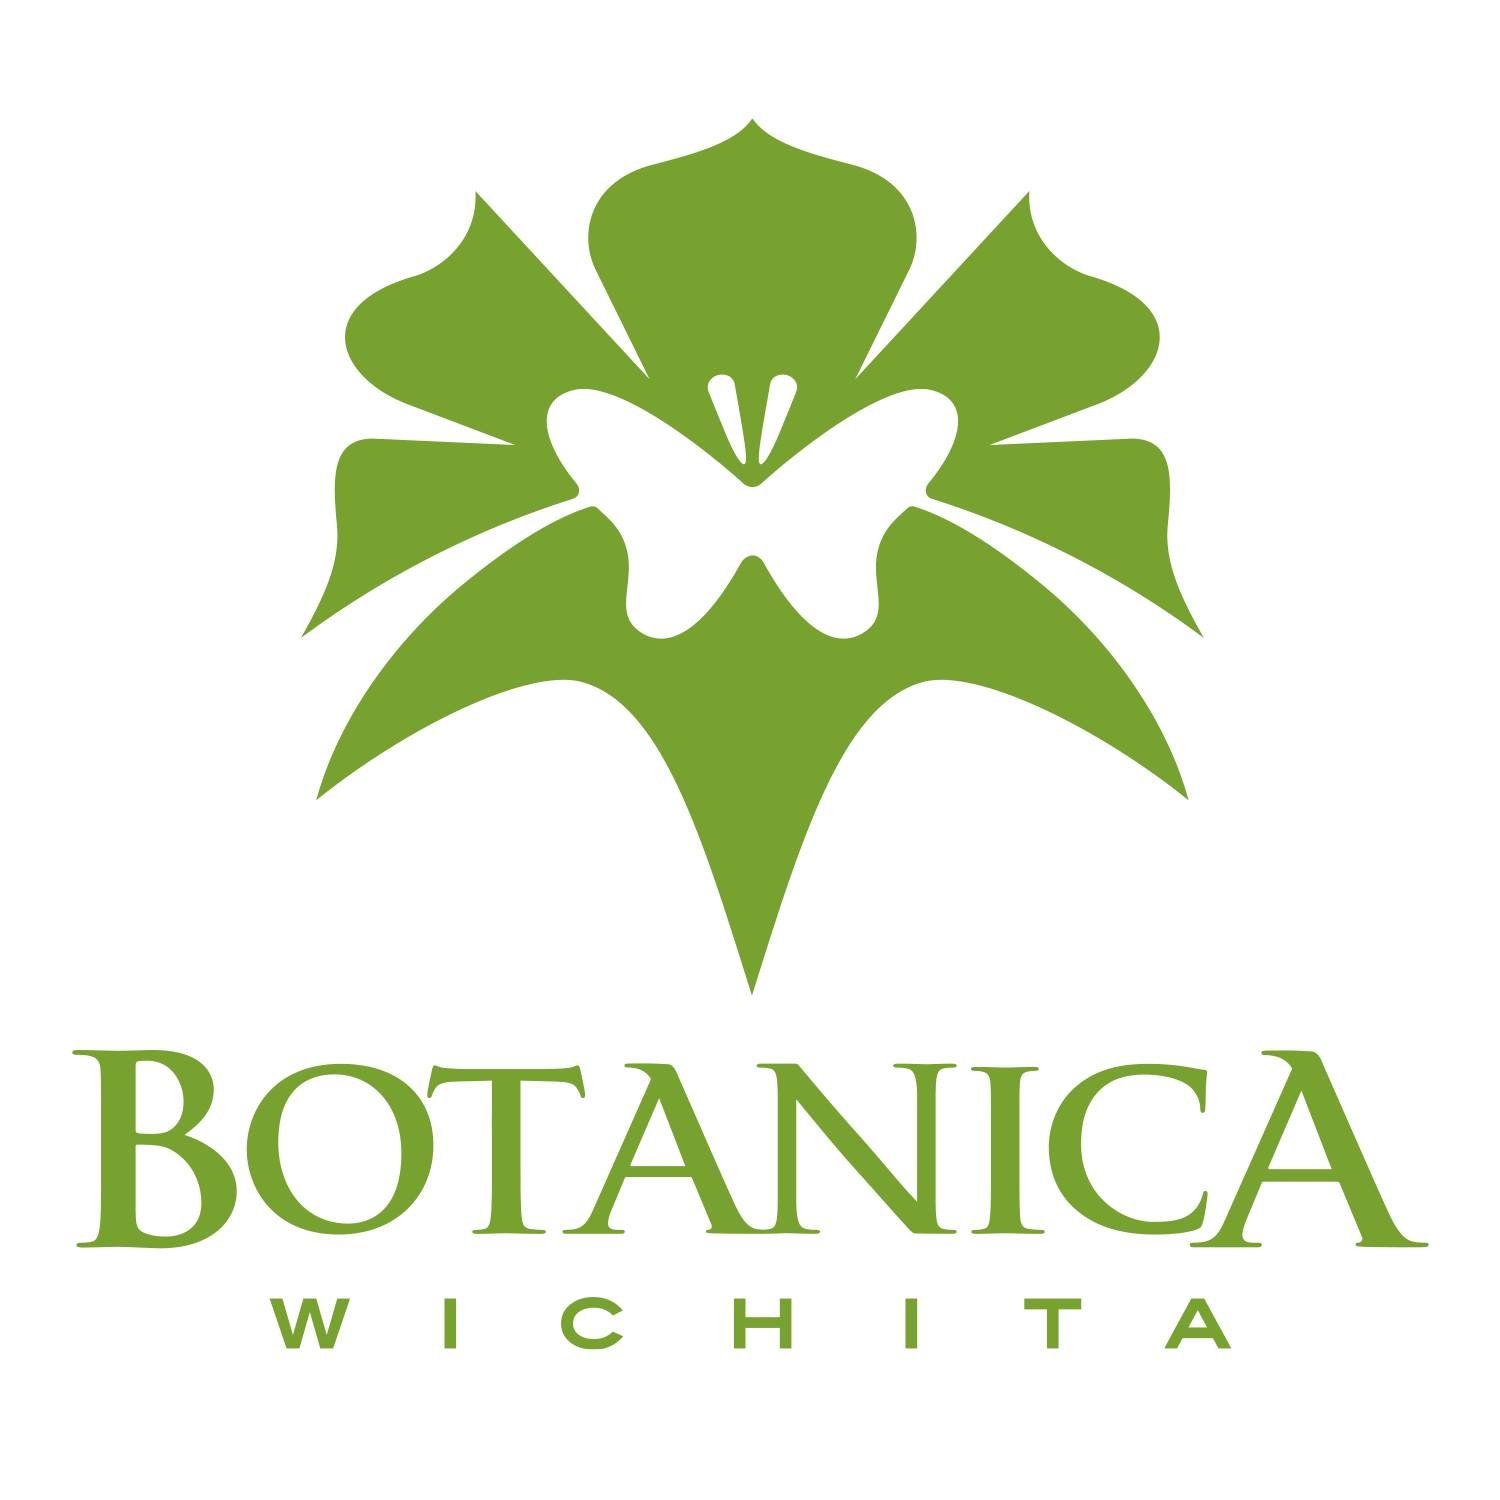 The Botanica -Wichita